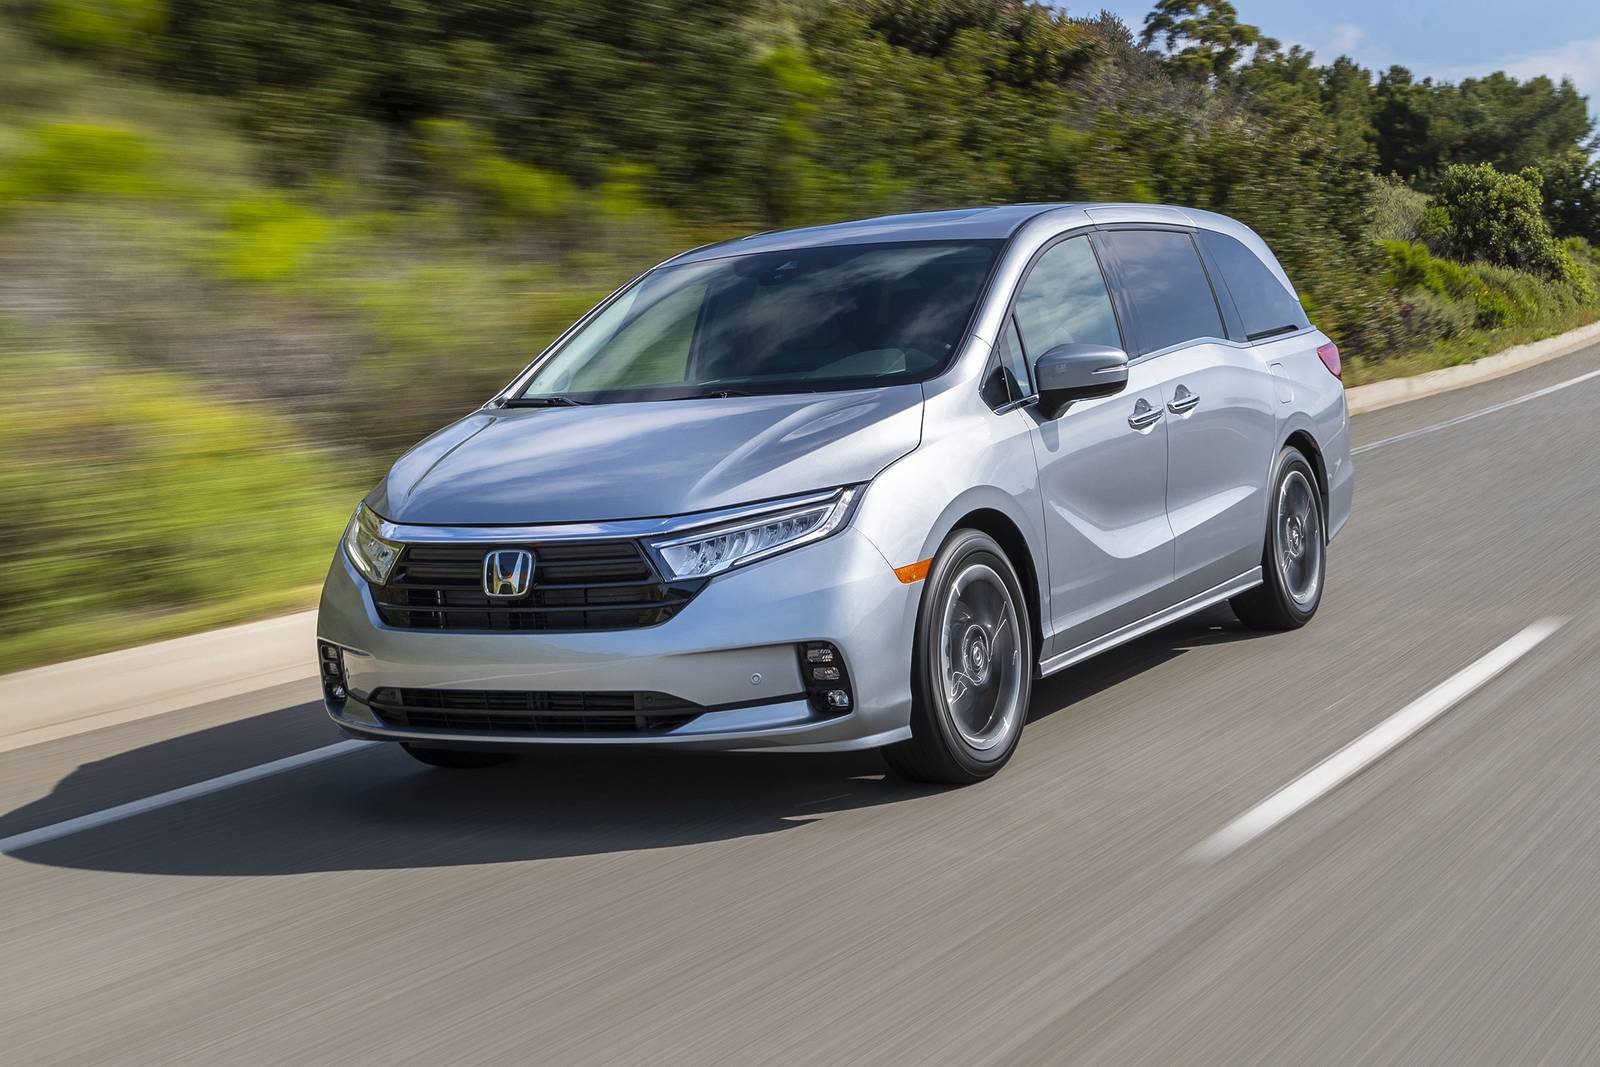 Honda Odyssey 2019 Vs 2021 Release Date